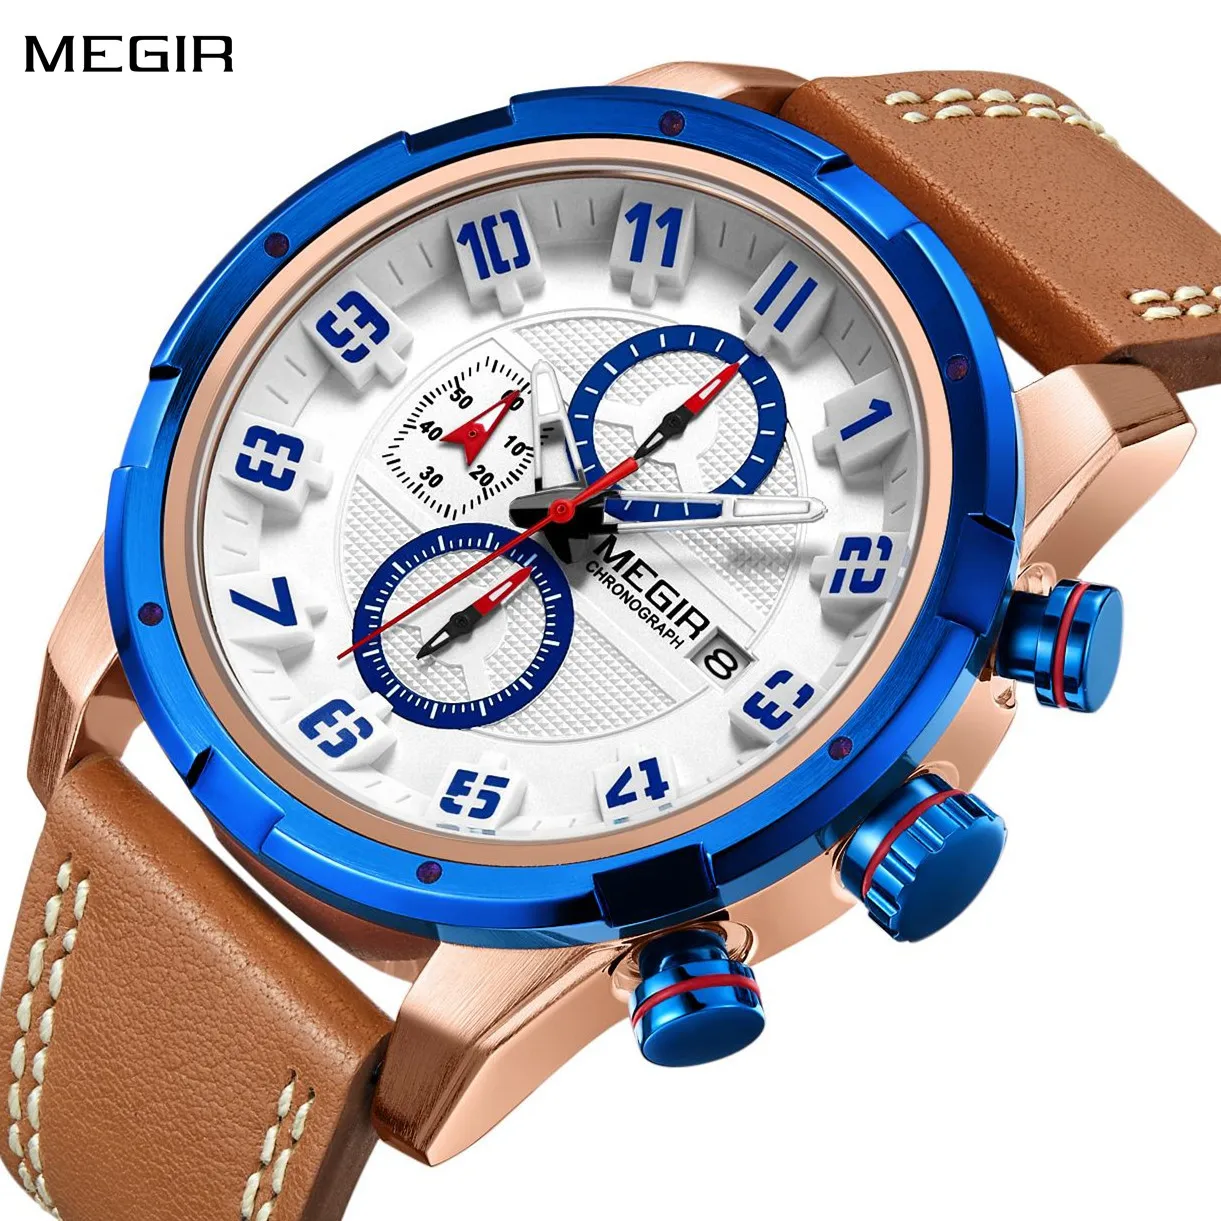 

MEGIR Chronograph Sport Watch Men Clock Leather Quartz Men Wrist Watches Time Hour Army Military Wristwatches Relogio Masculino